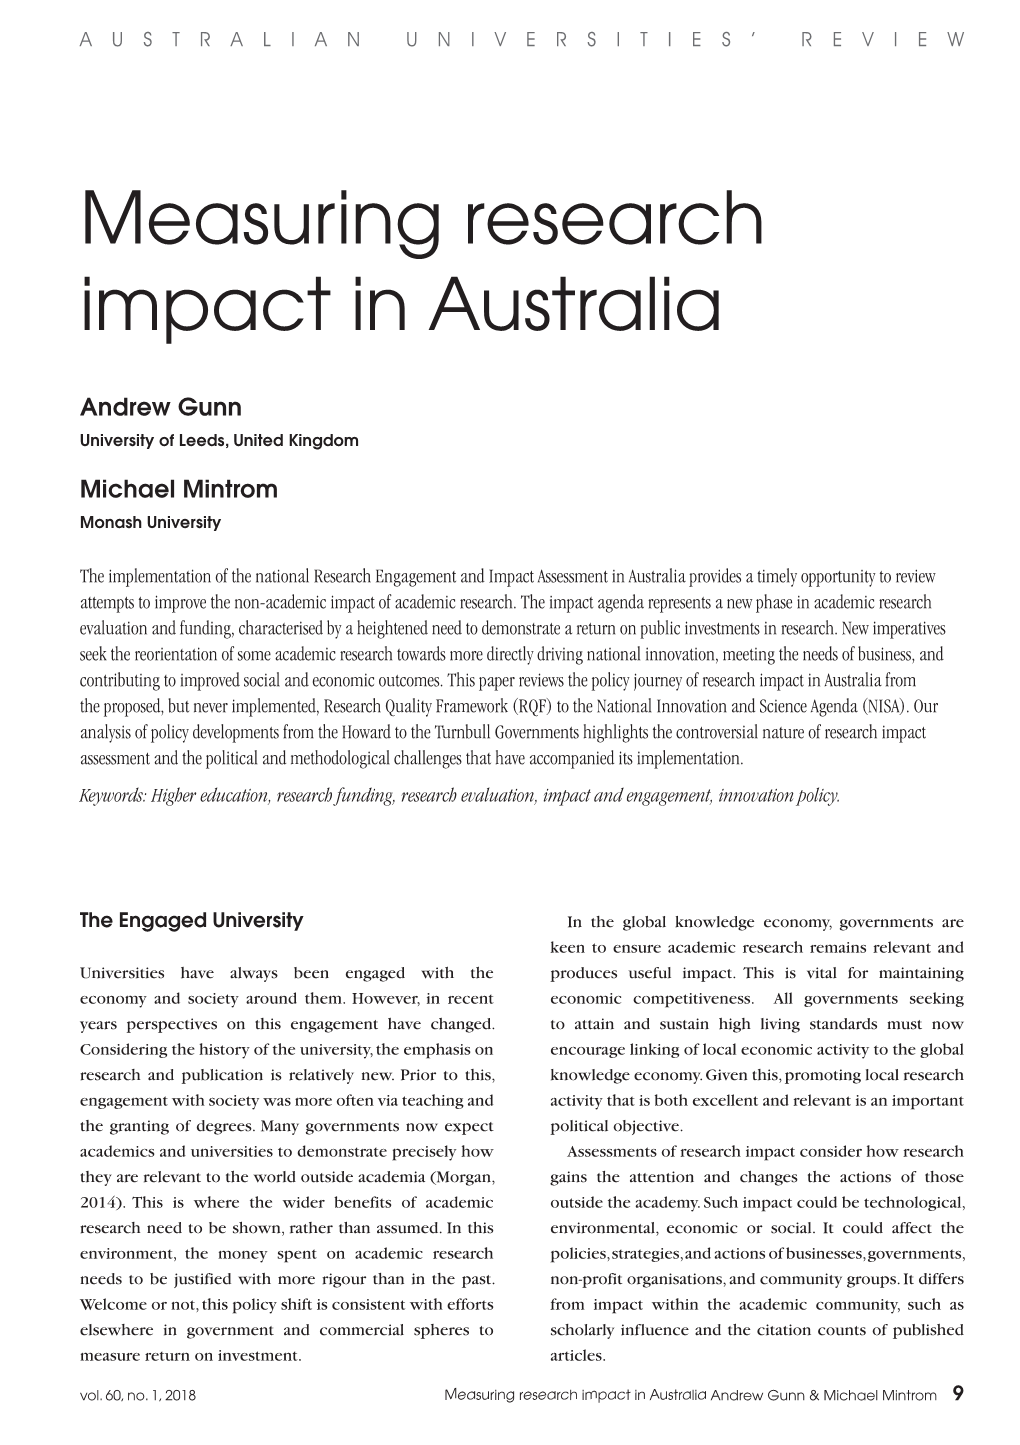 Measuring Research Impact in Australia